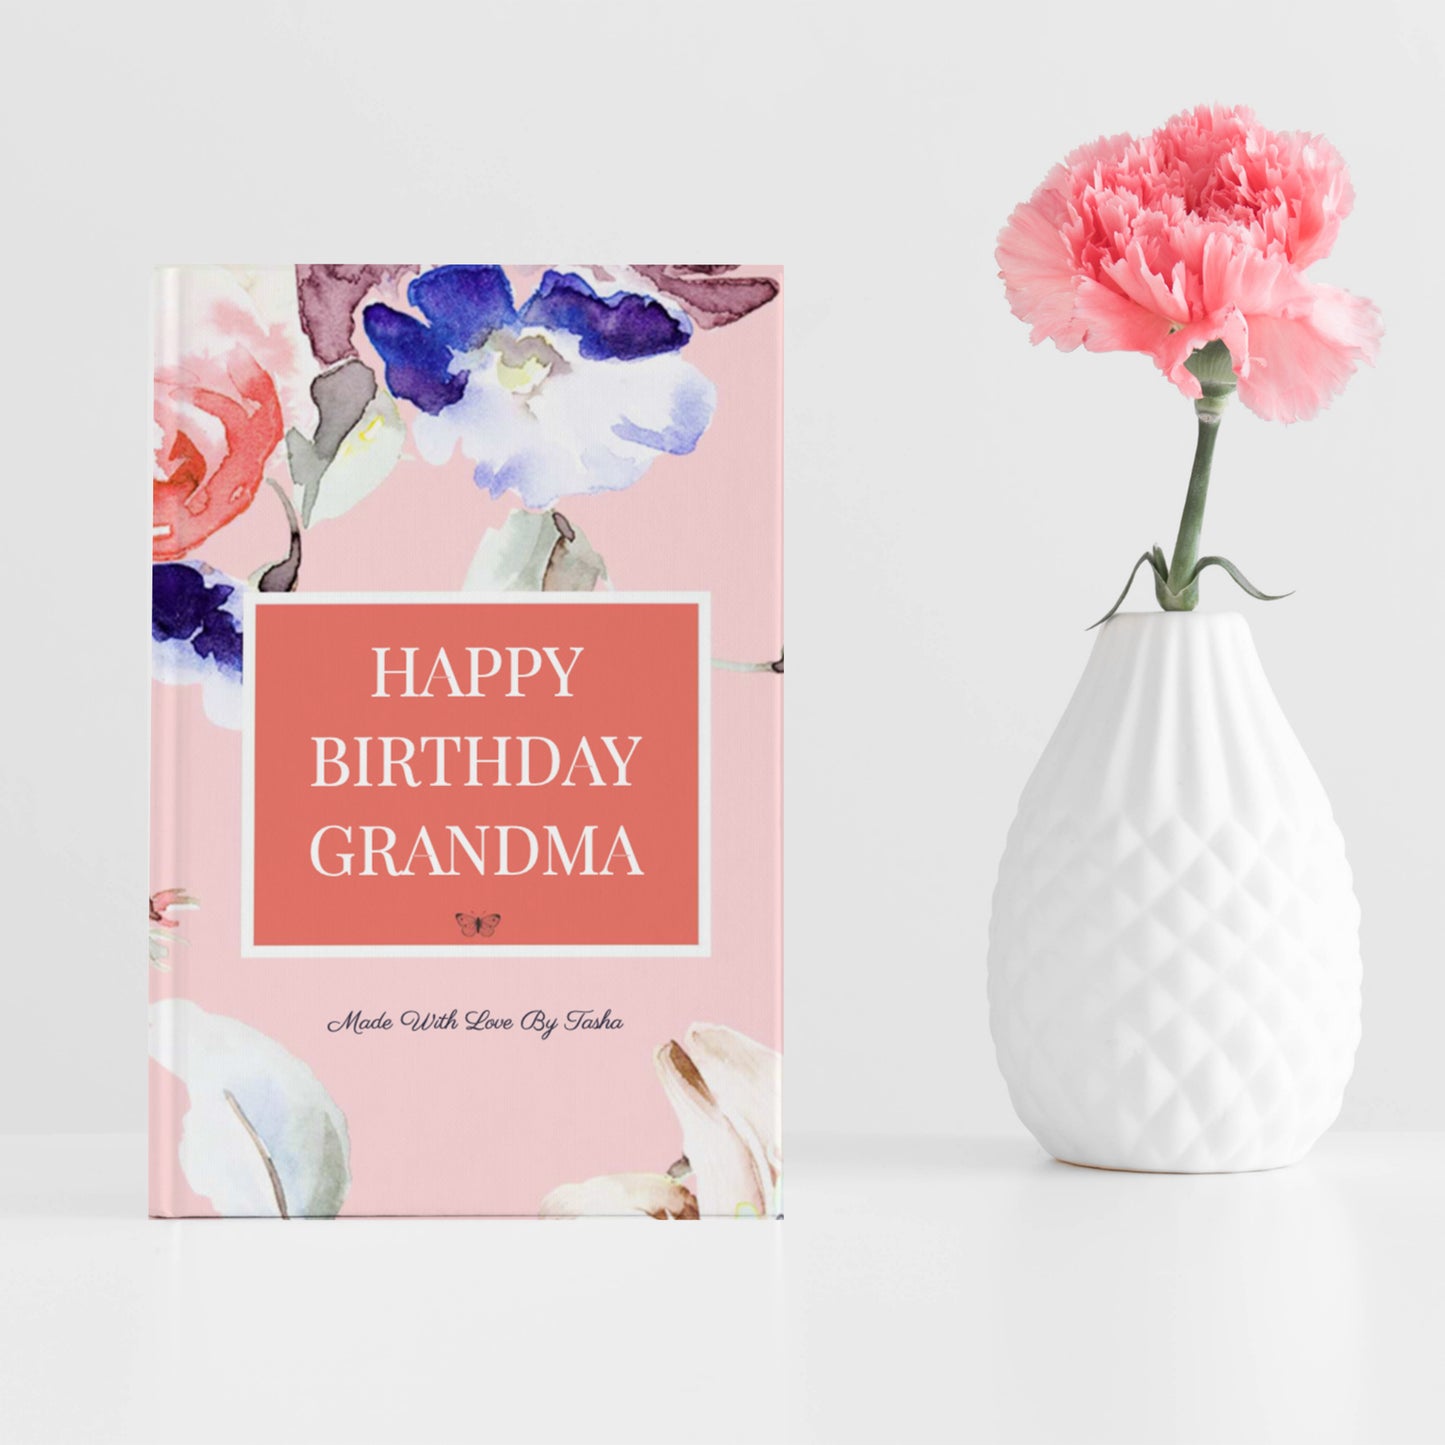 happy birthday grandma gift by Luhvee Books.